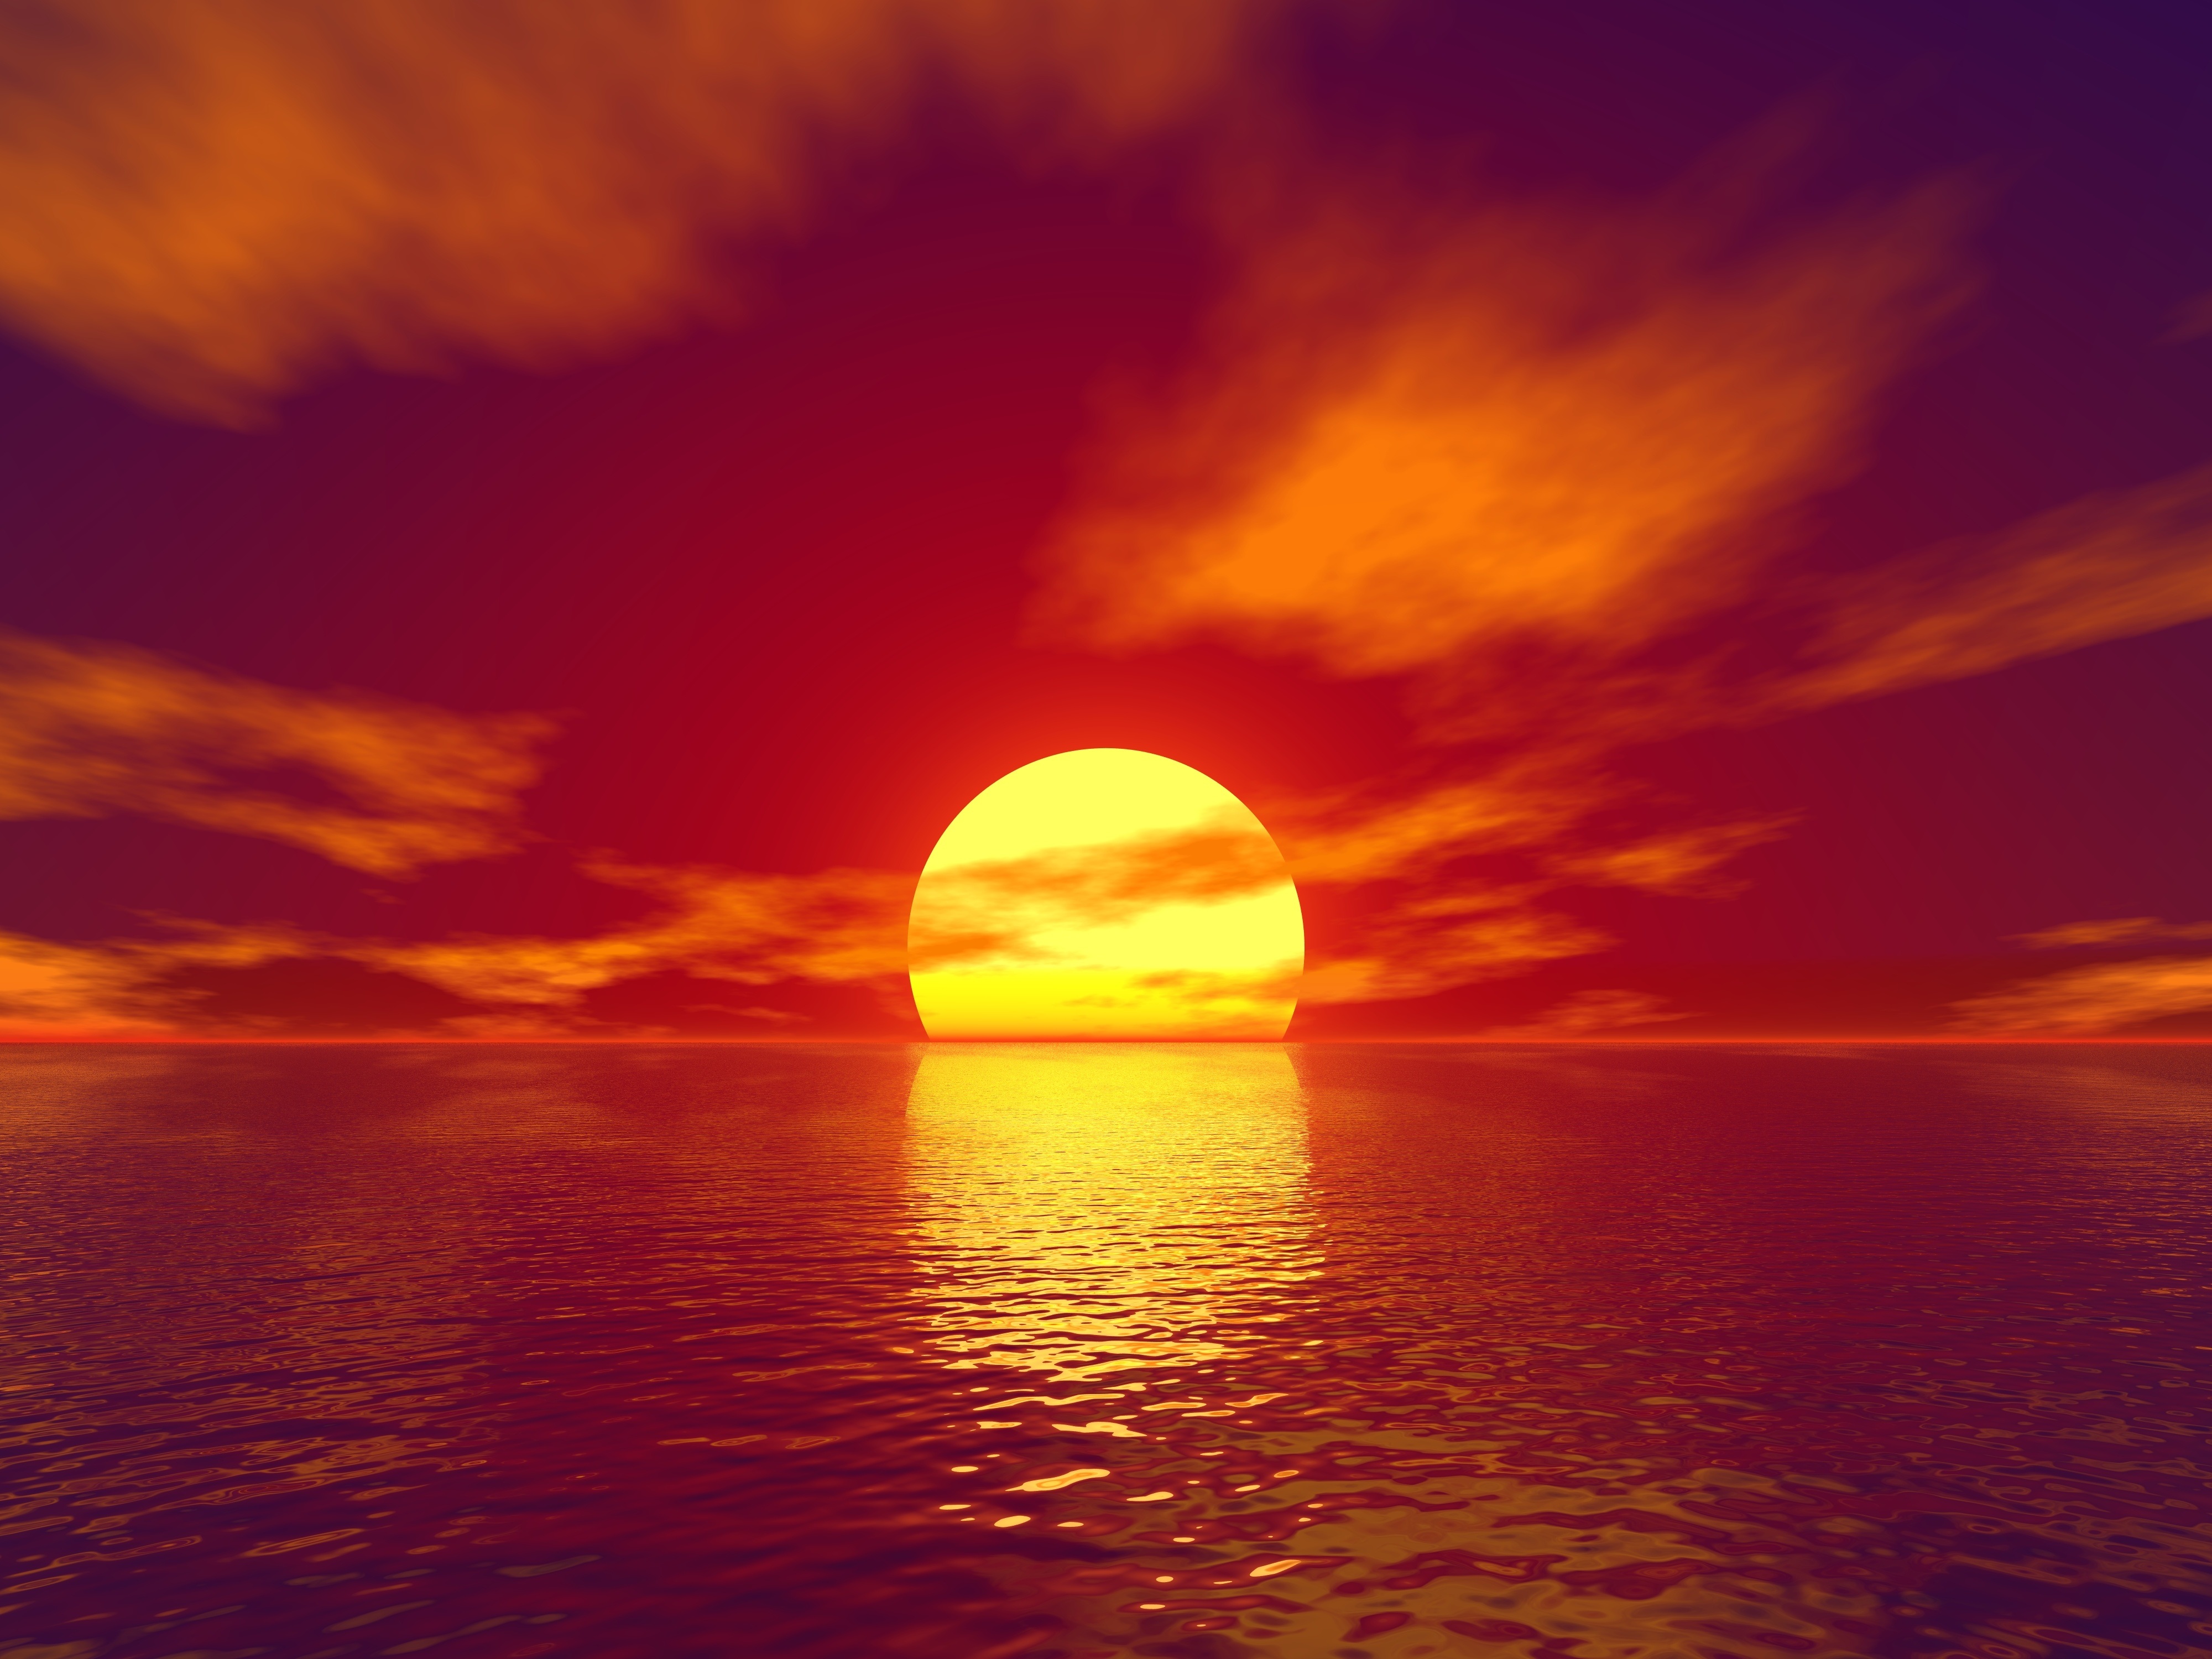 Ocean Sunset 4k Ultra Hd Wallpaper Background Image 4000x3000 Id